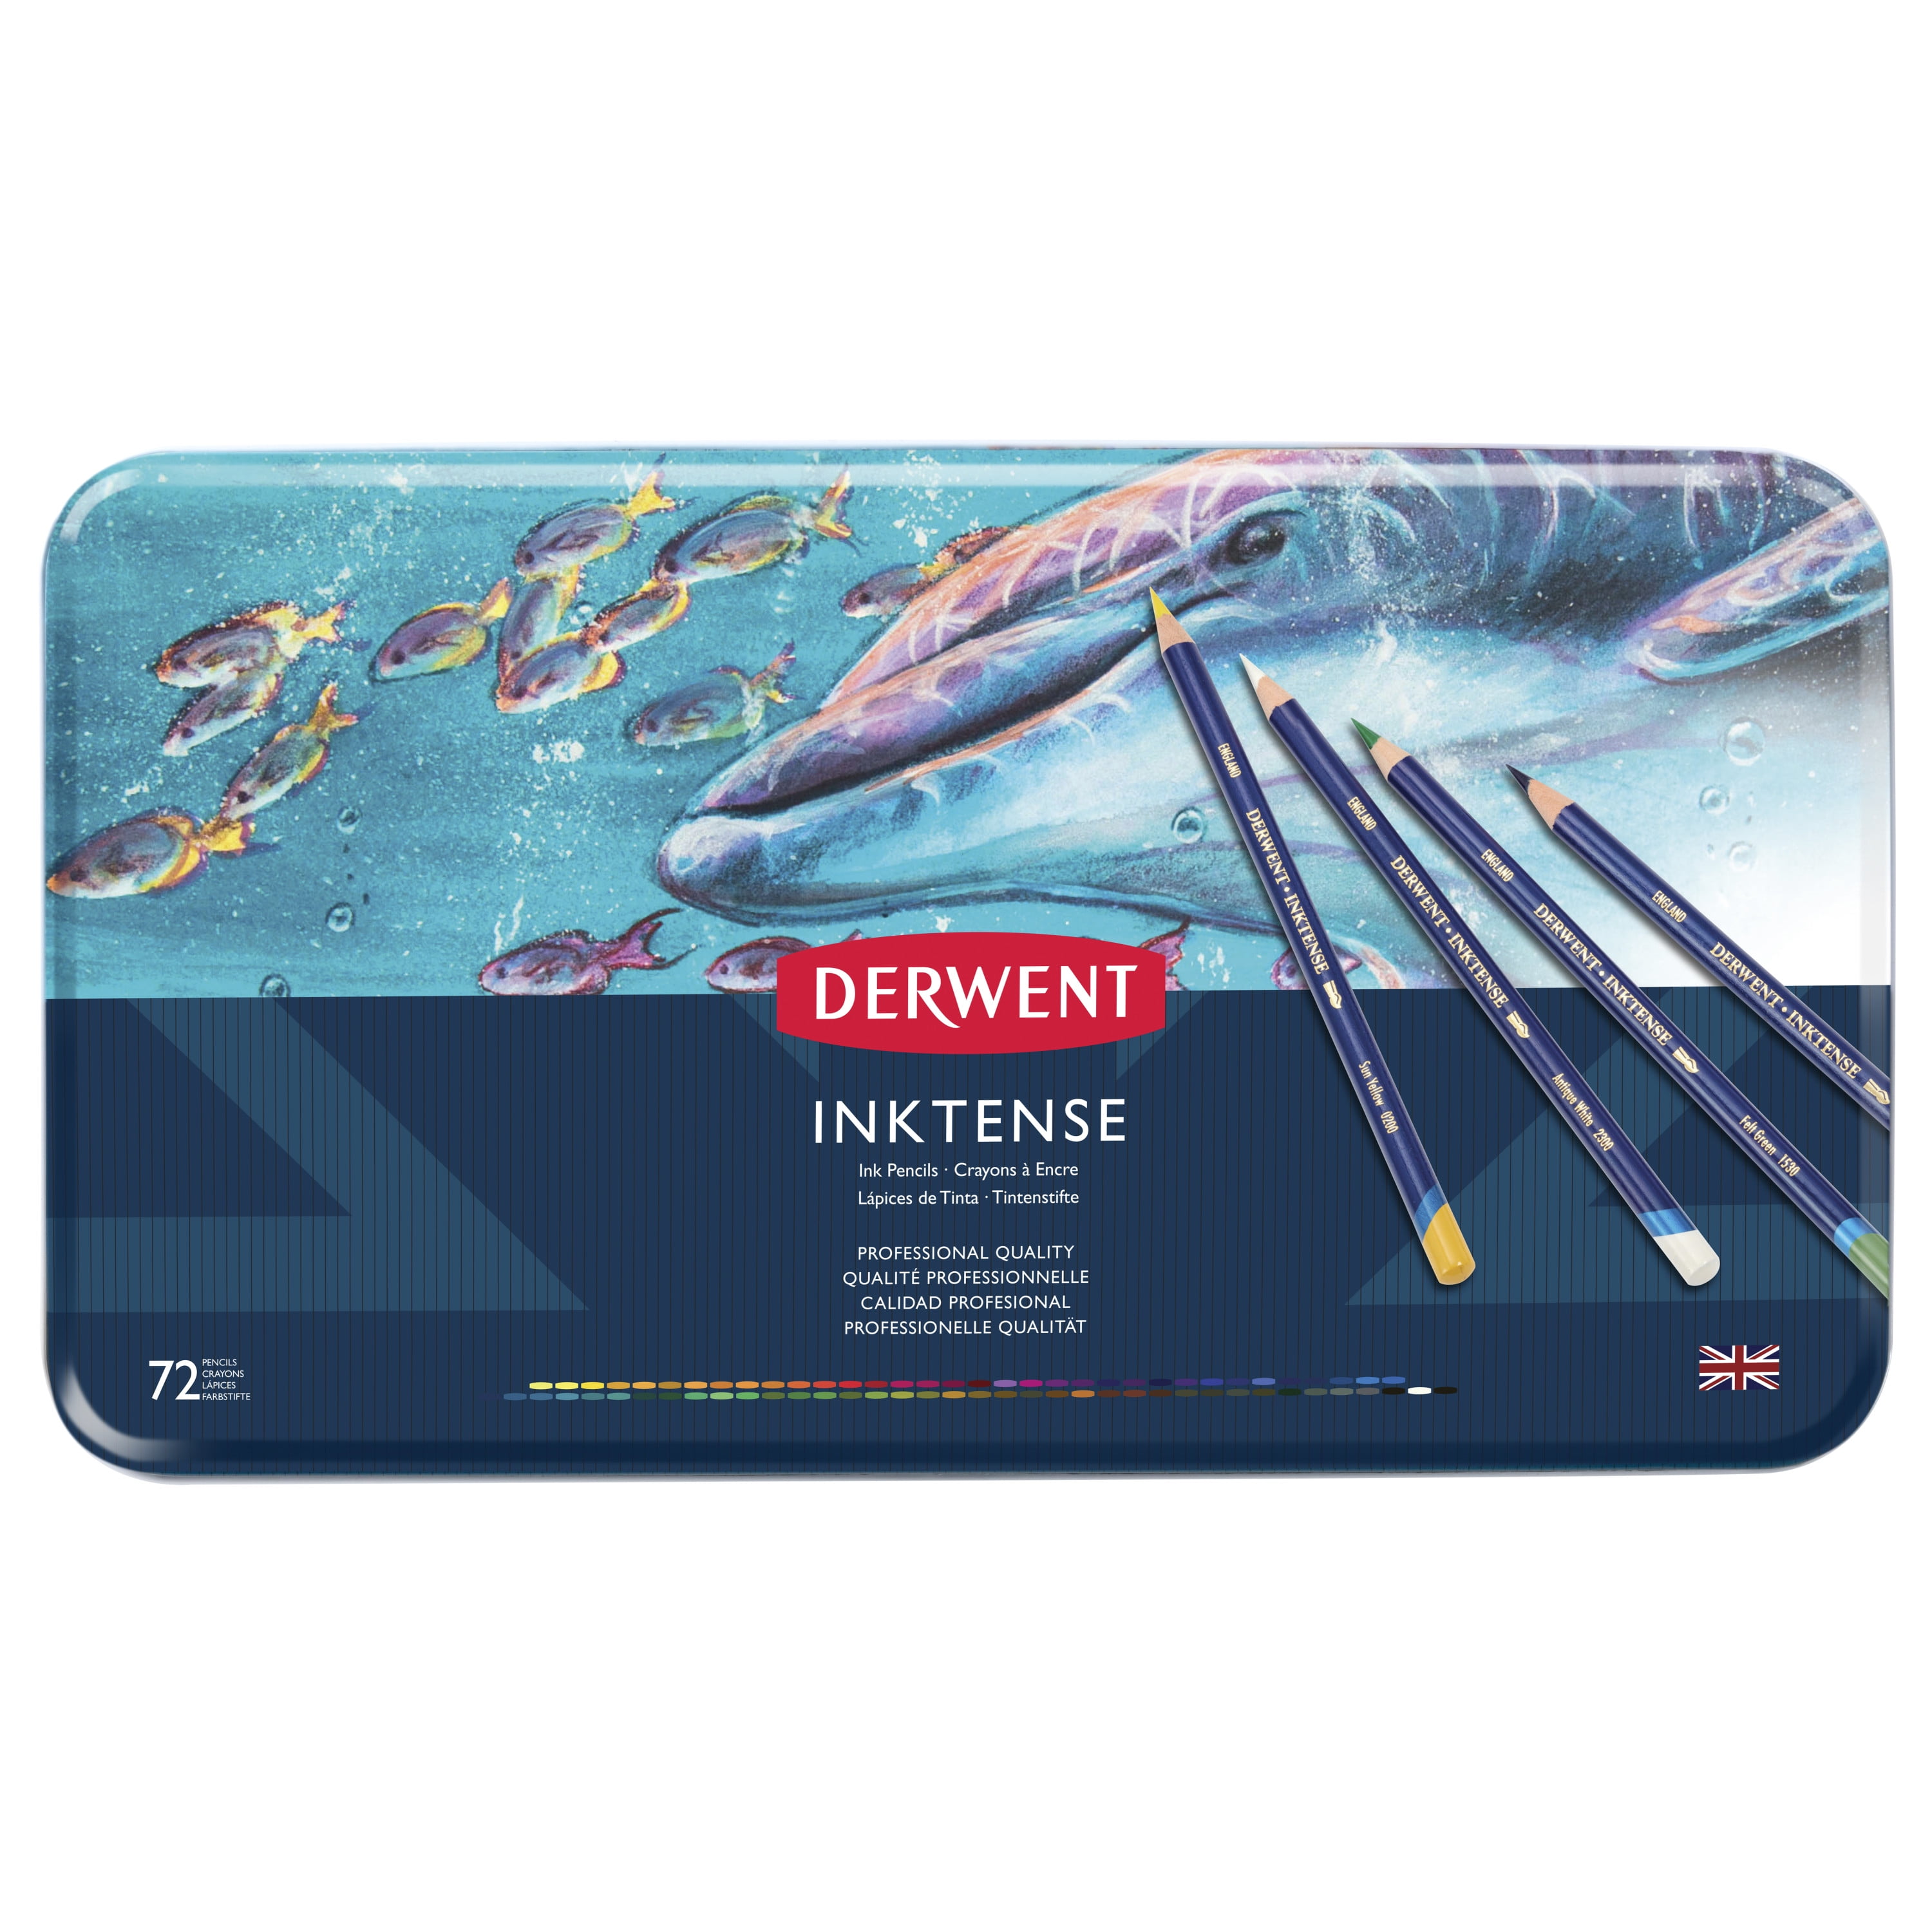 UK Derwent Inktense Pencil 36-Color Tin Set,Vibrant, intense colors  Lightfast Includes reusable tin storage case,blendable ink - AliExpress